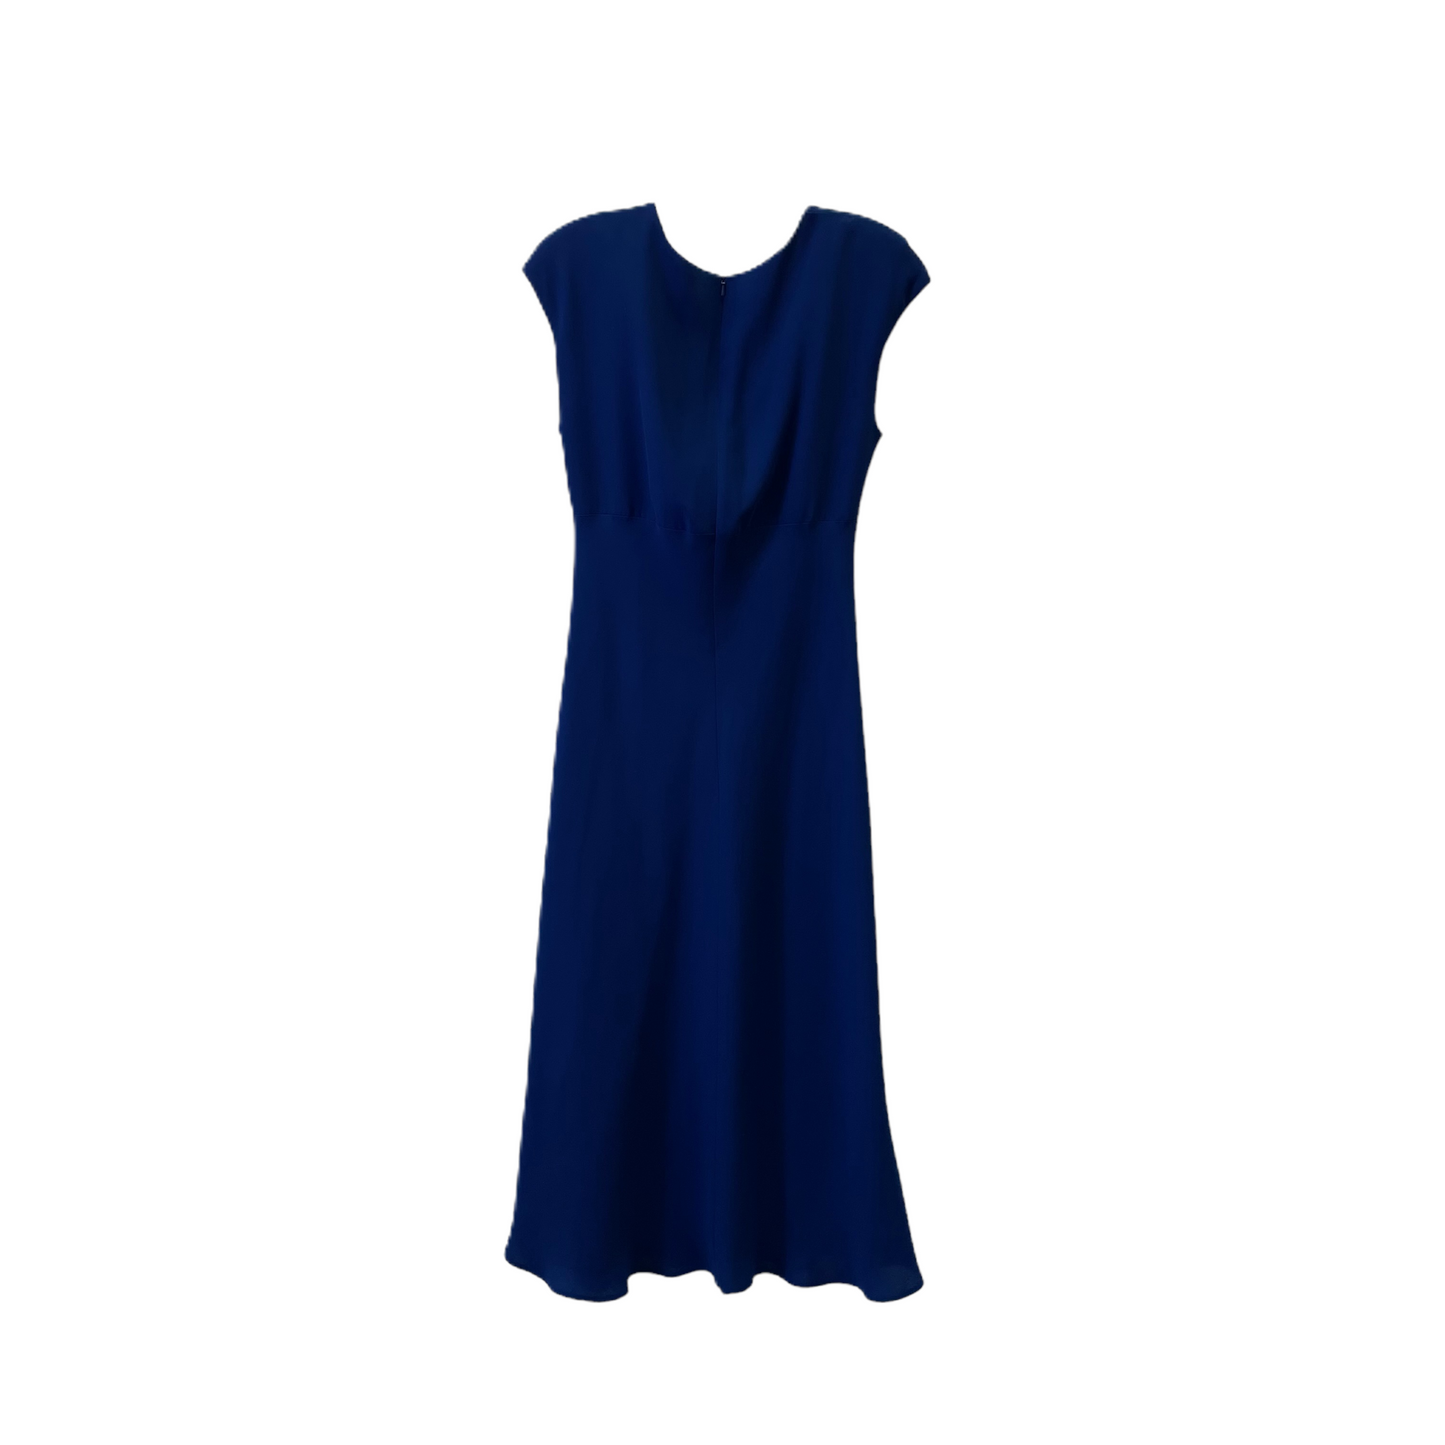 Blue Dress Party Long By Jones New York, Size: L